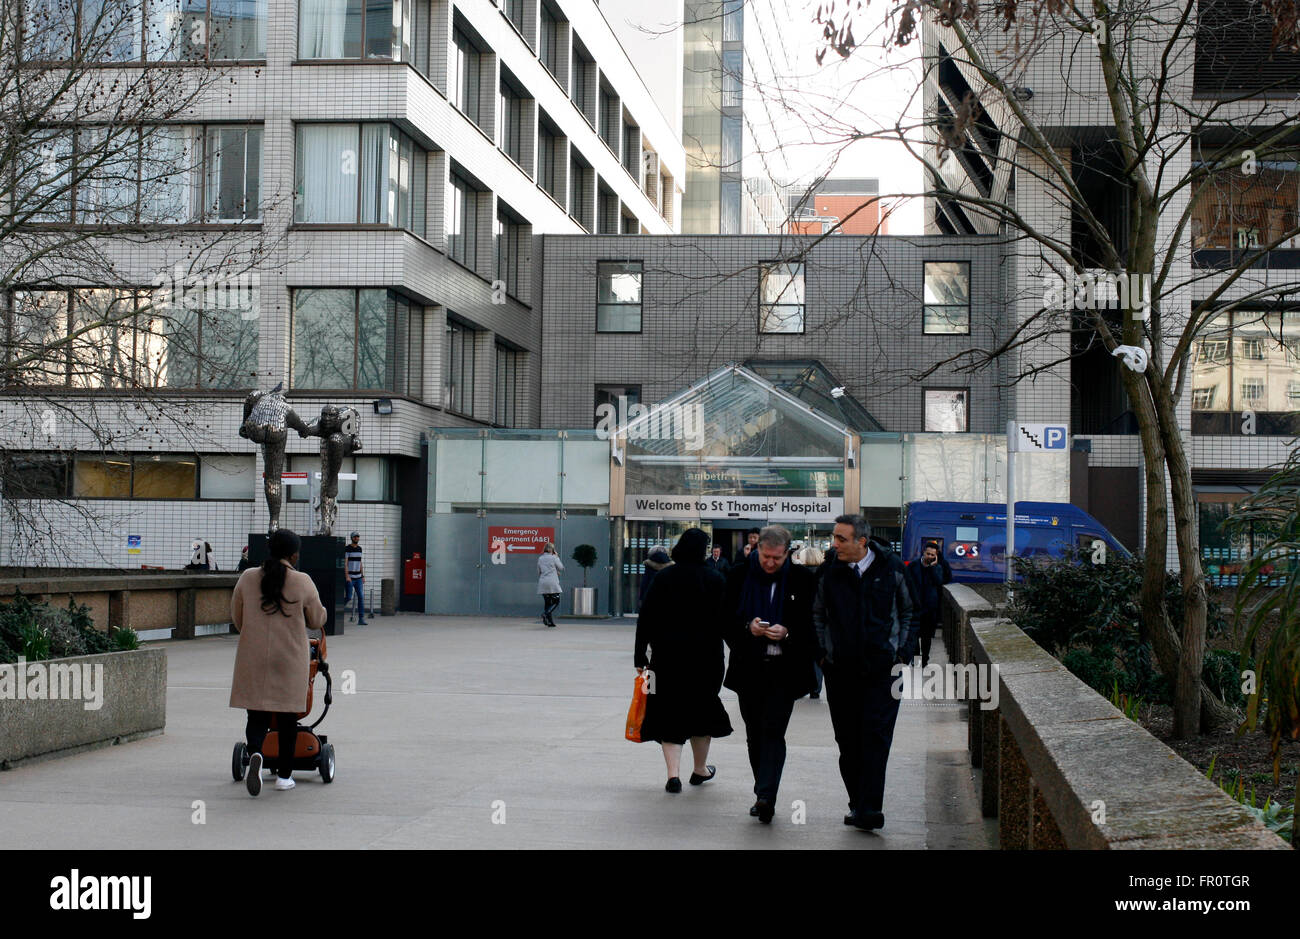 St Thomas' Hospital in Westminster Brücke Straße London sw1 uk März 2016 Stockfoto